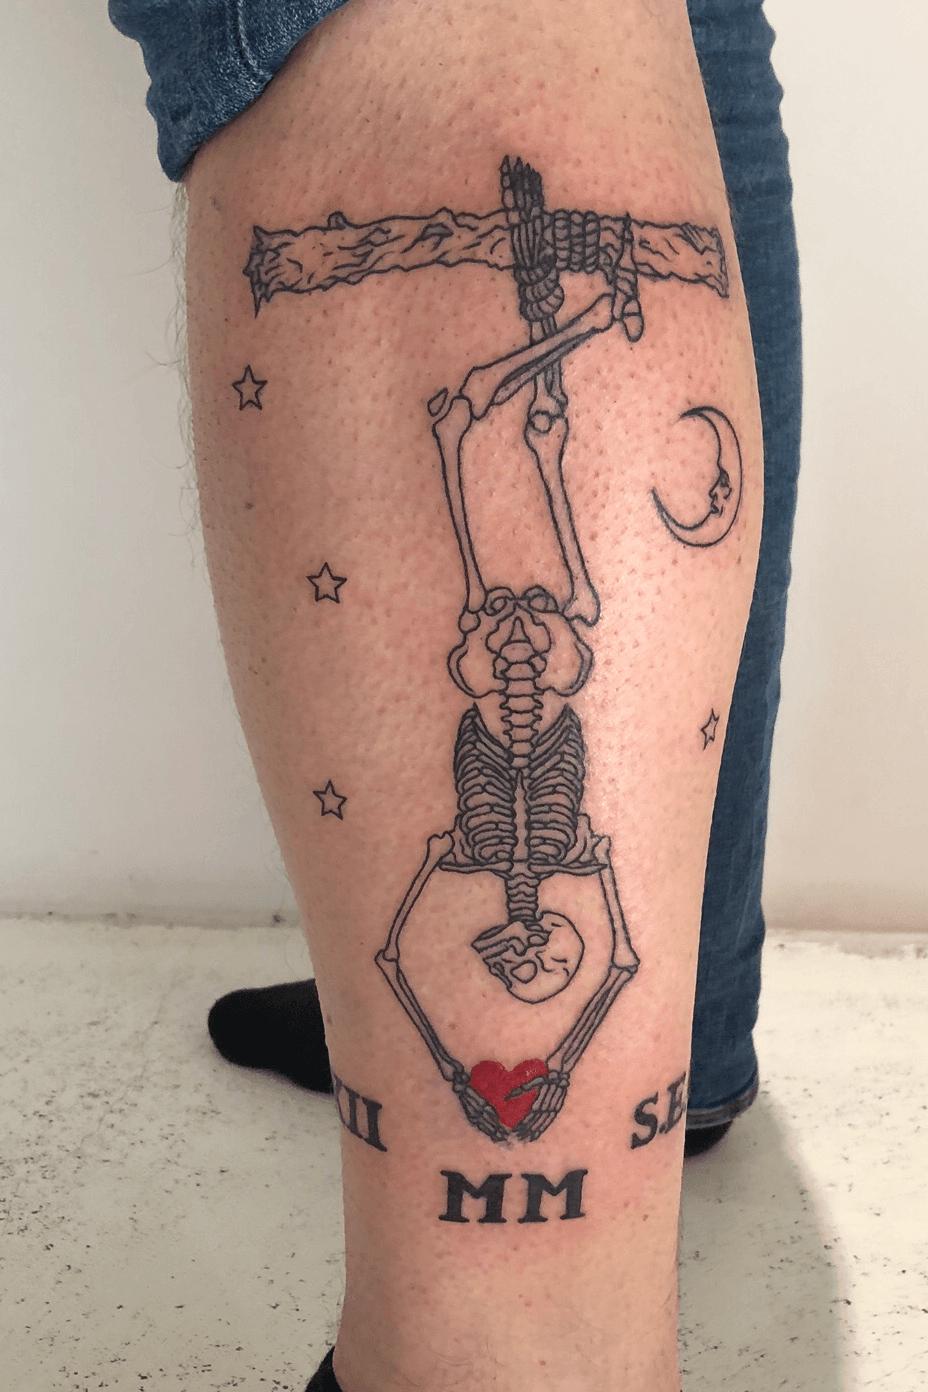 Hanged man tarot Done by Rat  Midwest Tattoo BroadrippleIN  rtattoos